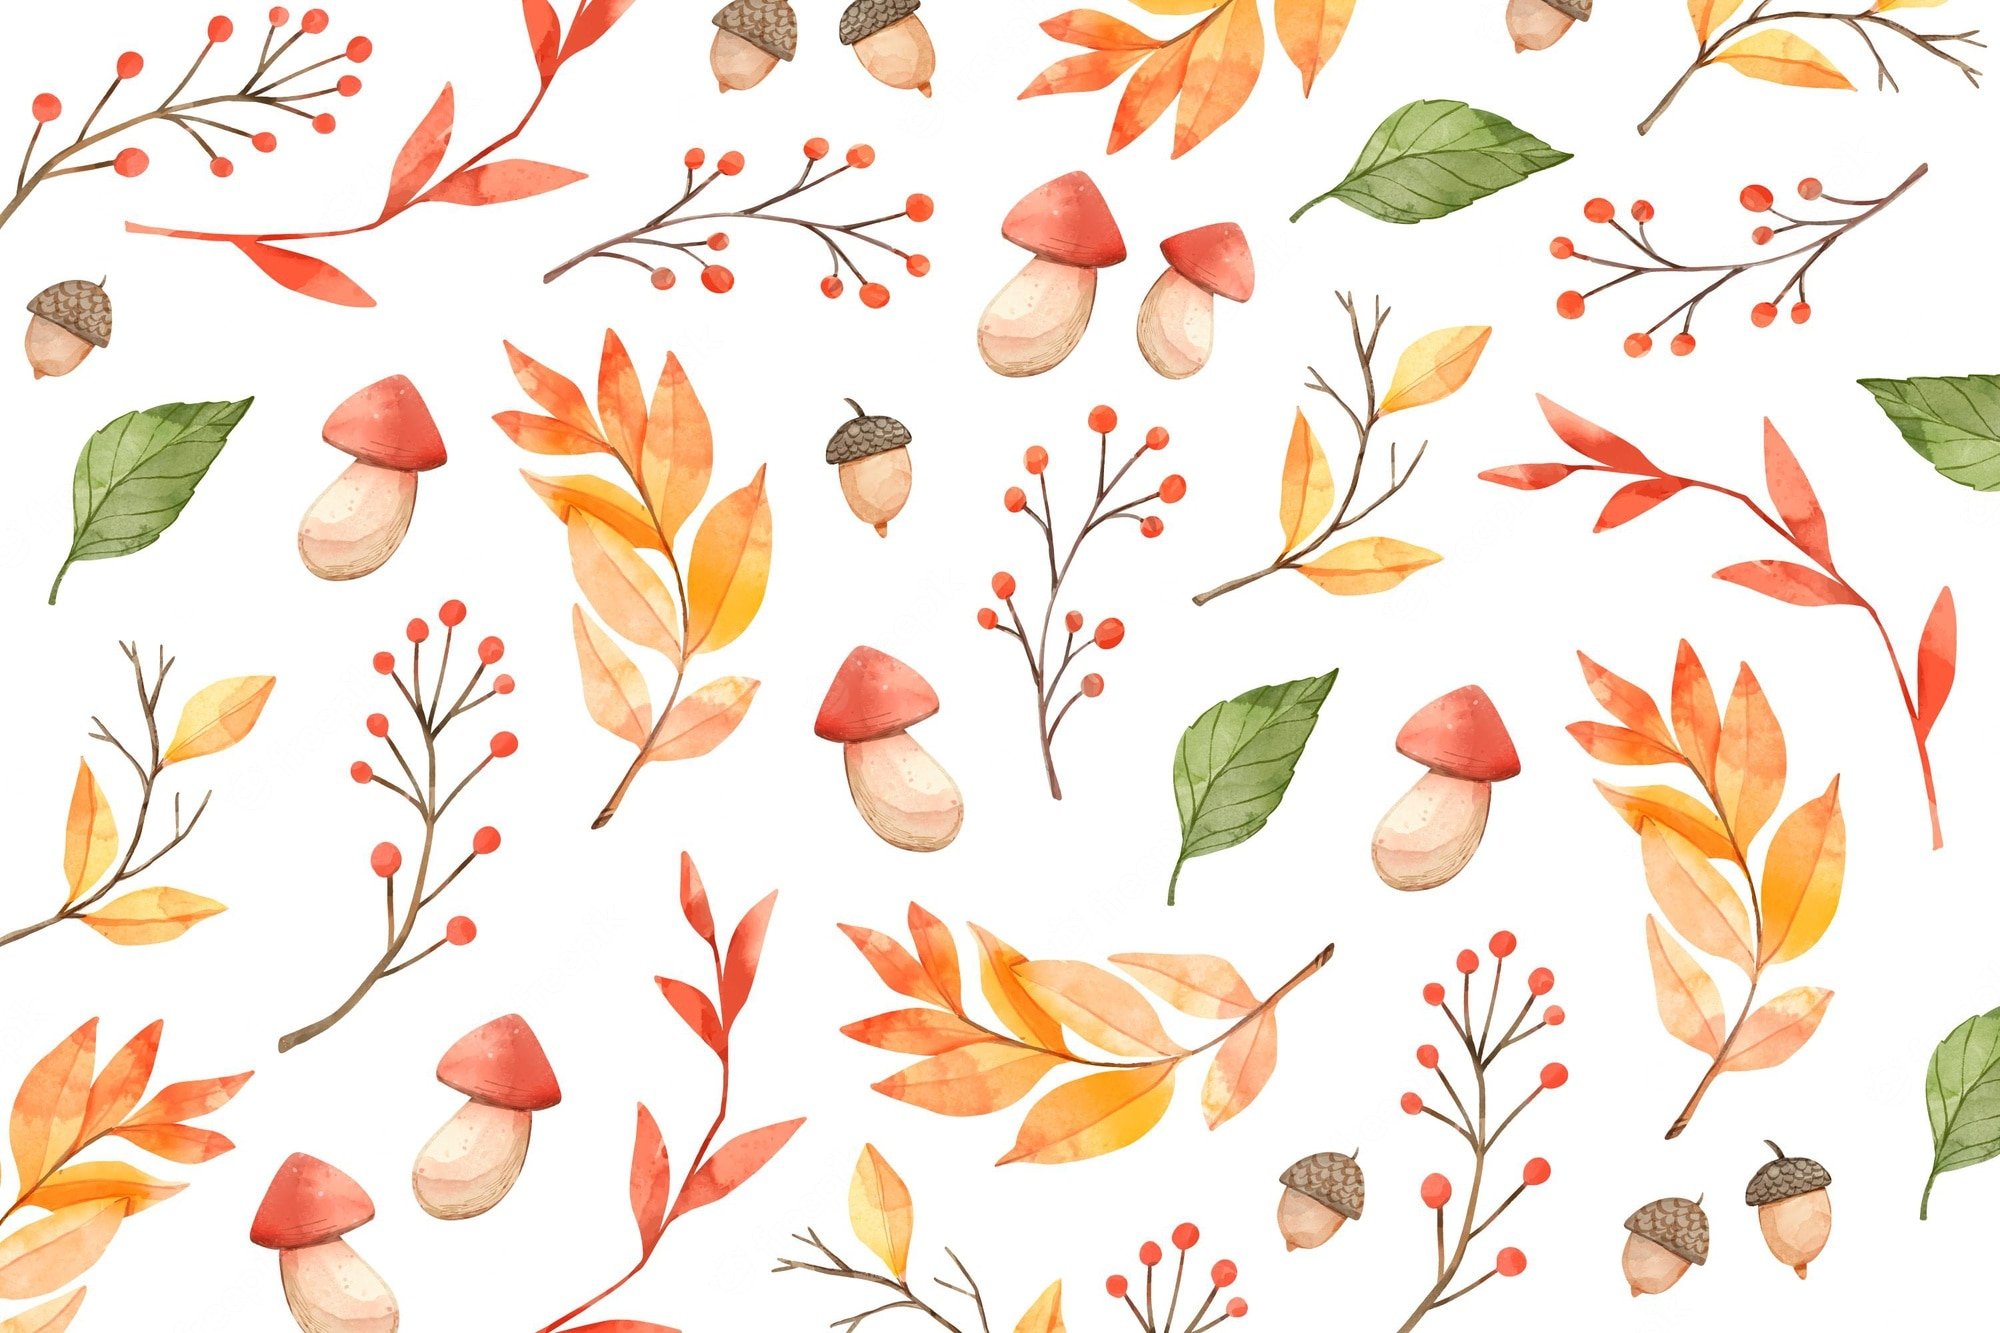 Autumn watercolor background Image. Free Vectors, & PSD